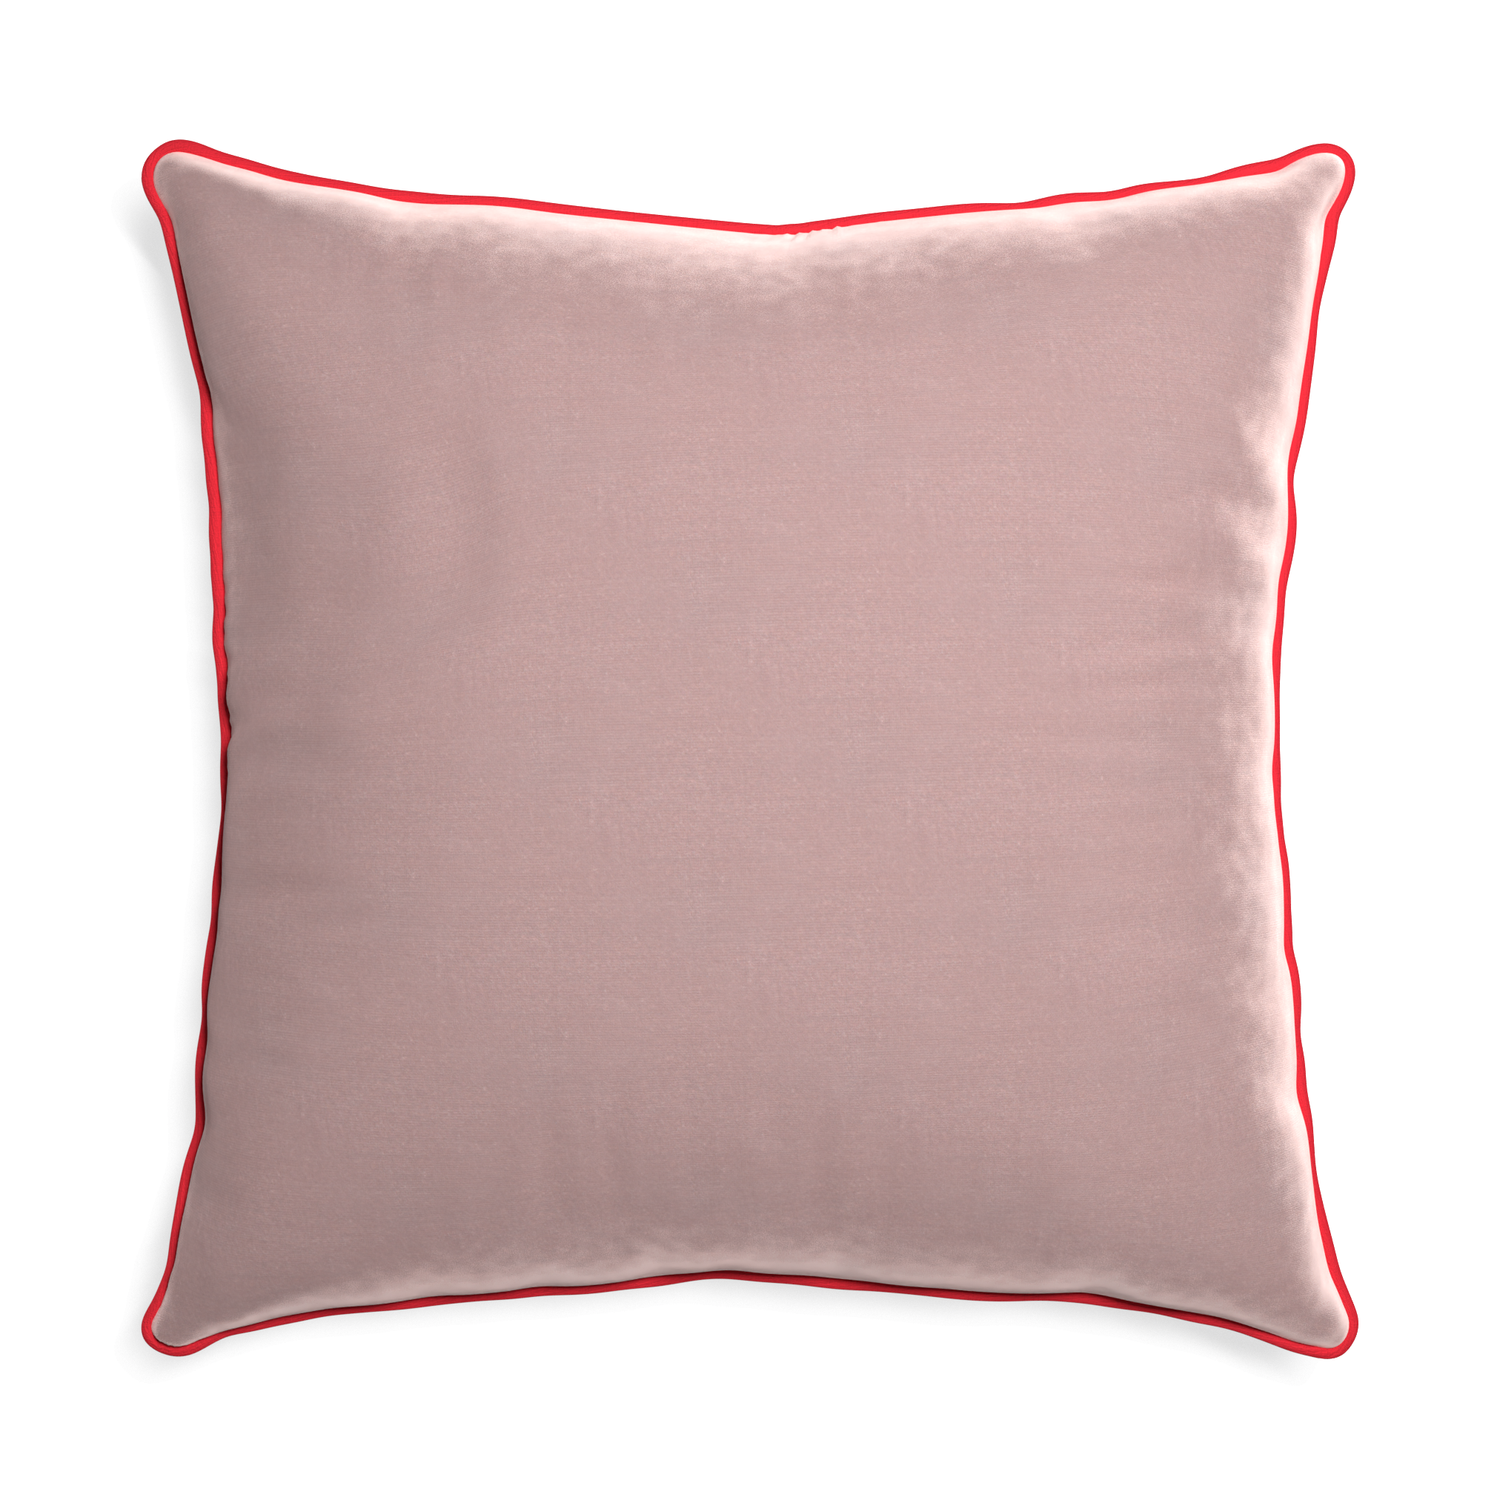 Euro-sham mauve velvet custom pillow with cherry piping on white background